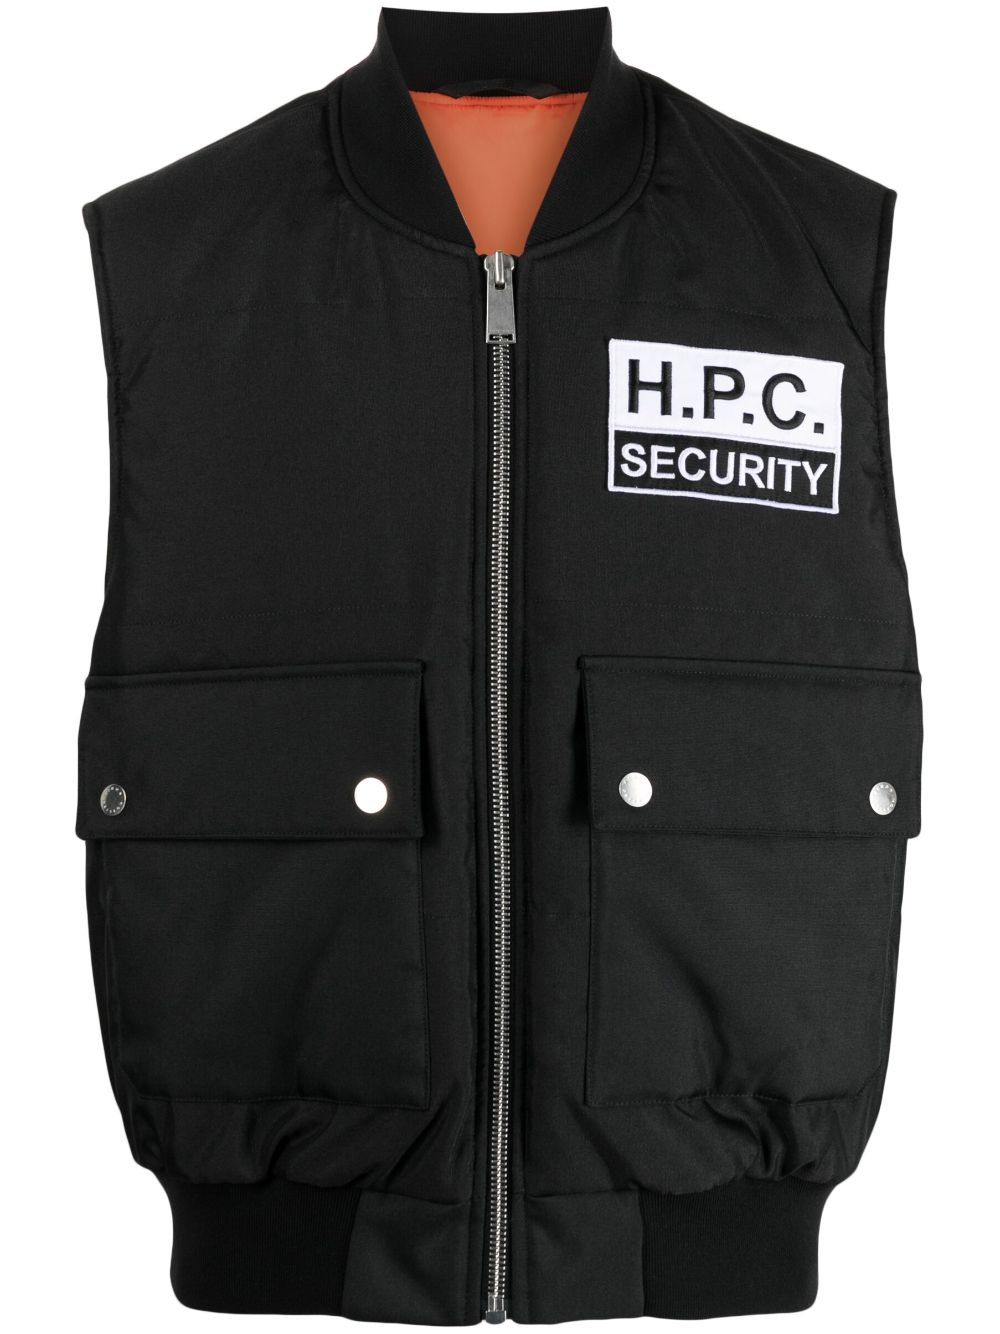 H.P.C. Security gilet